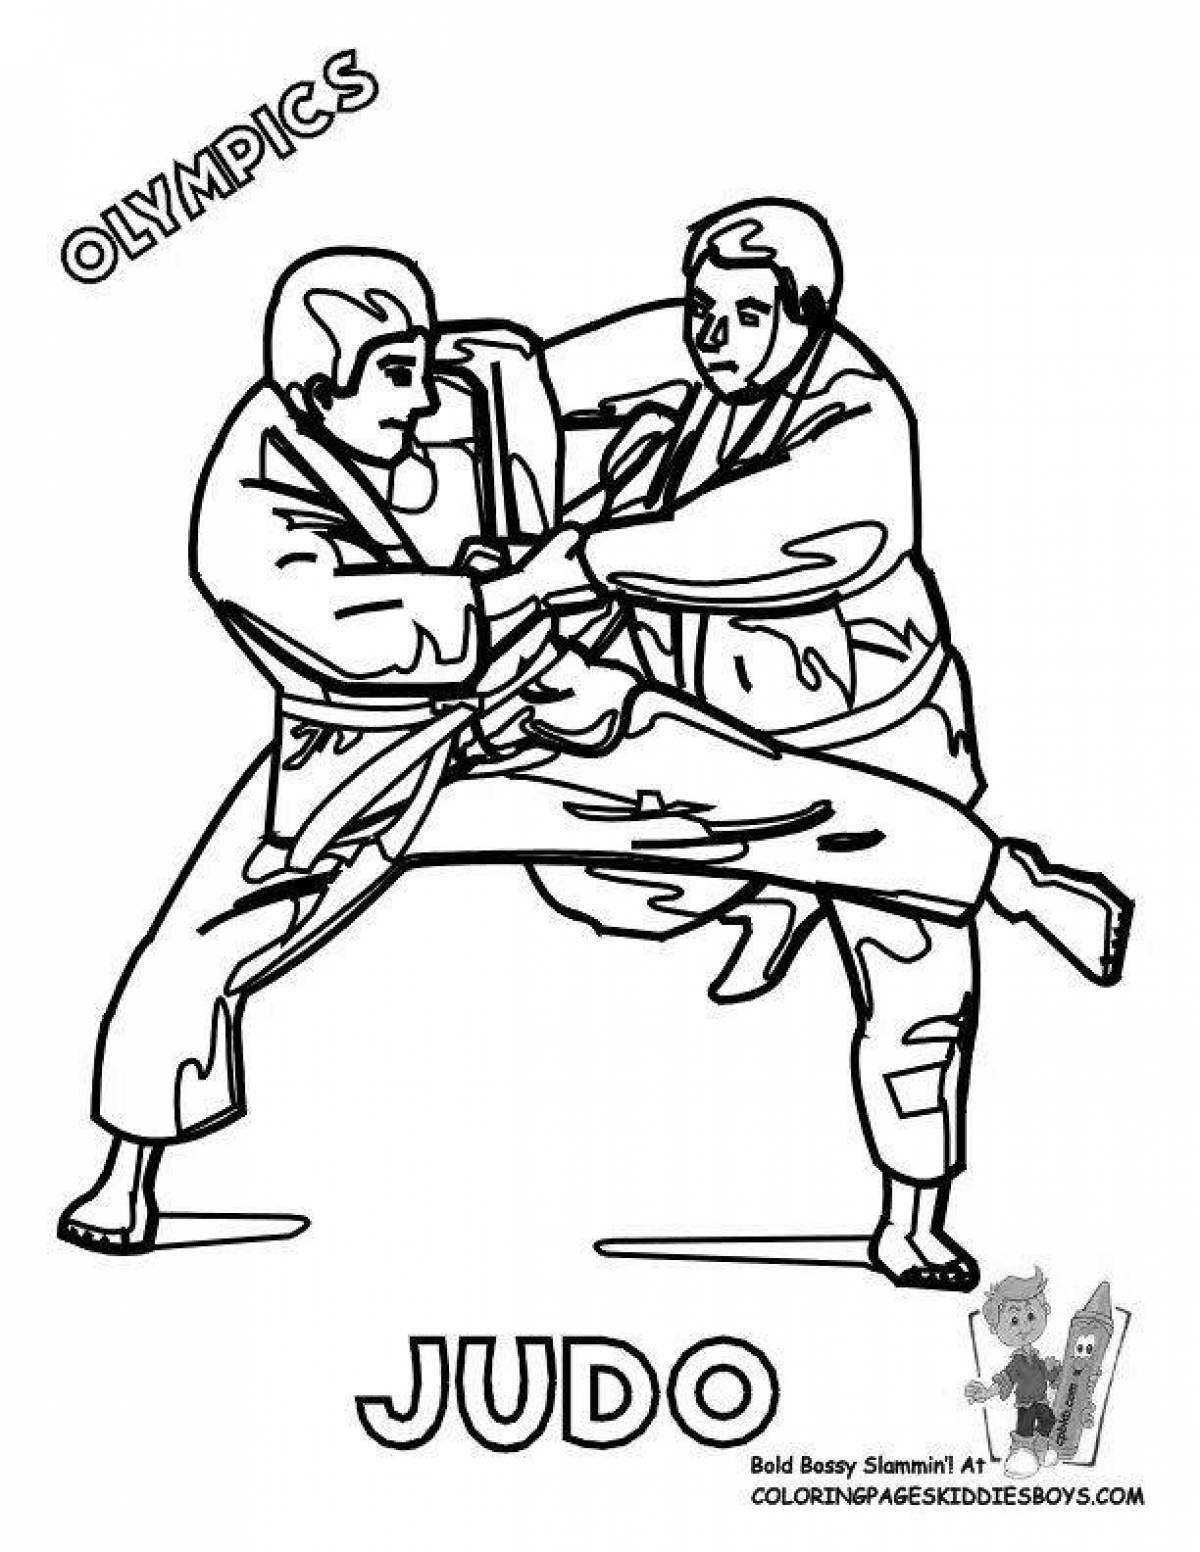 Judo bold coloring